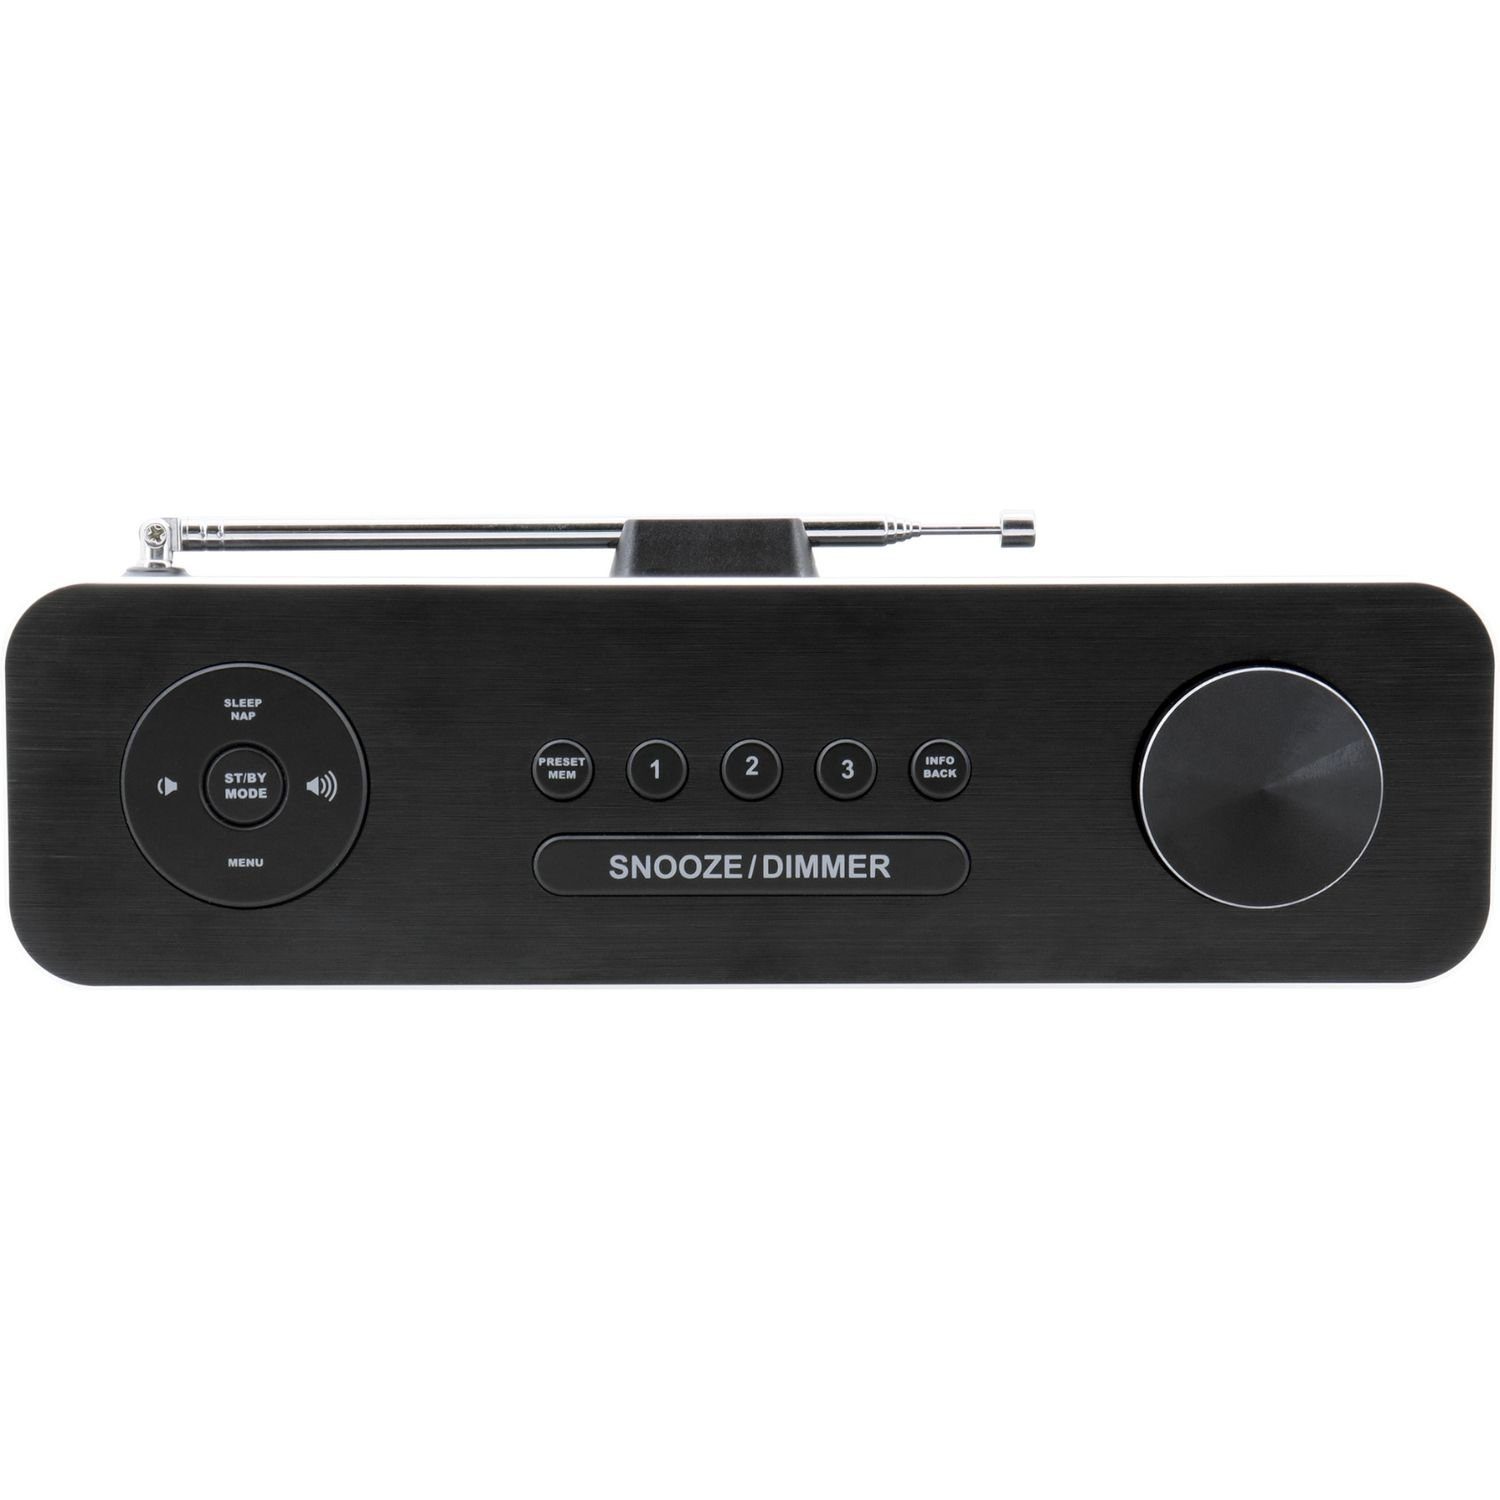 Soundmaster DAB700SW tragbares Radio DAB+ Boombox Streaming SD USB Boombox Bluetooth 2x6 W